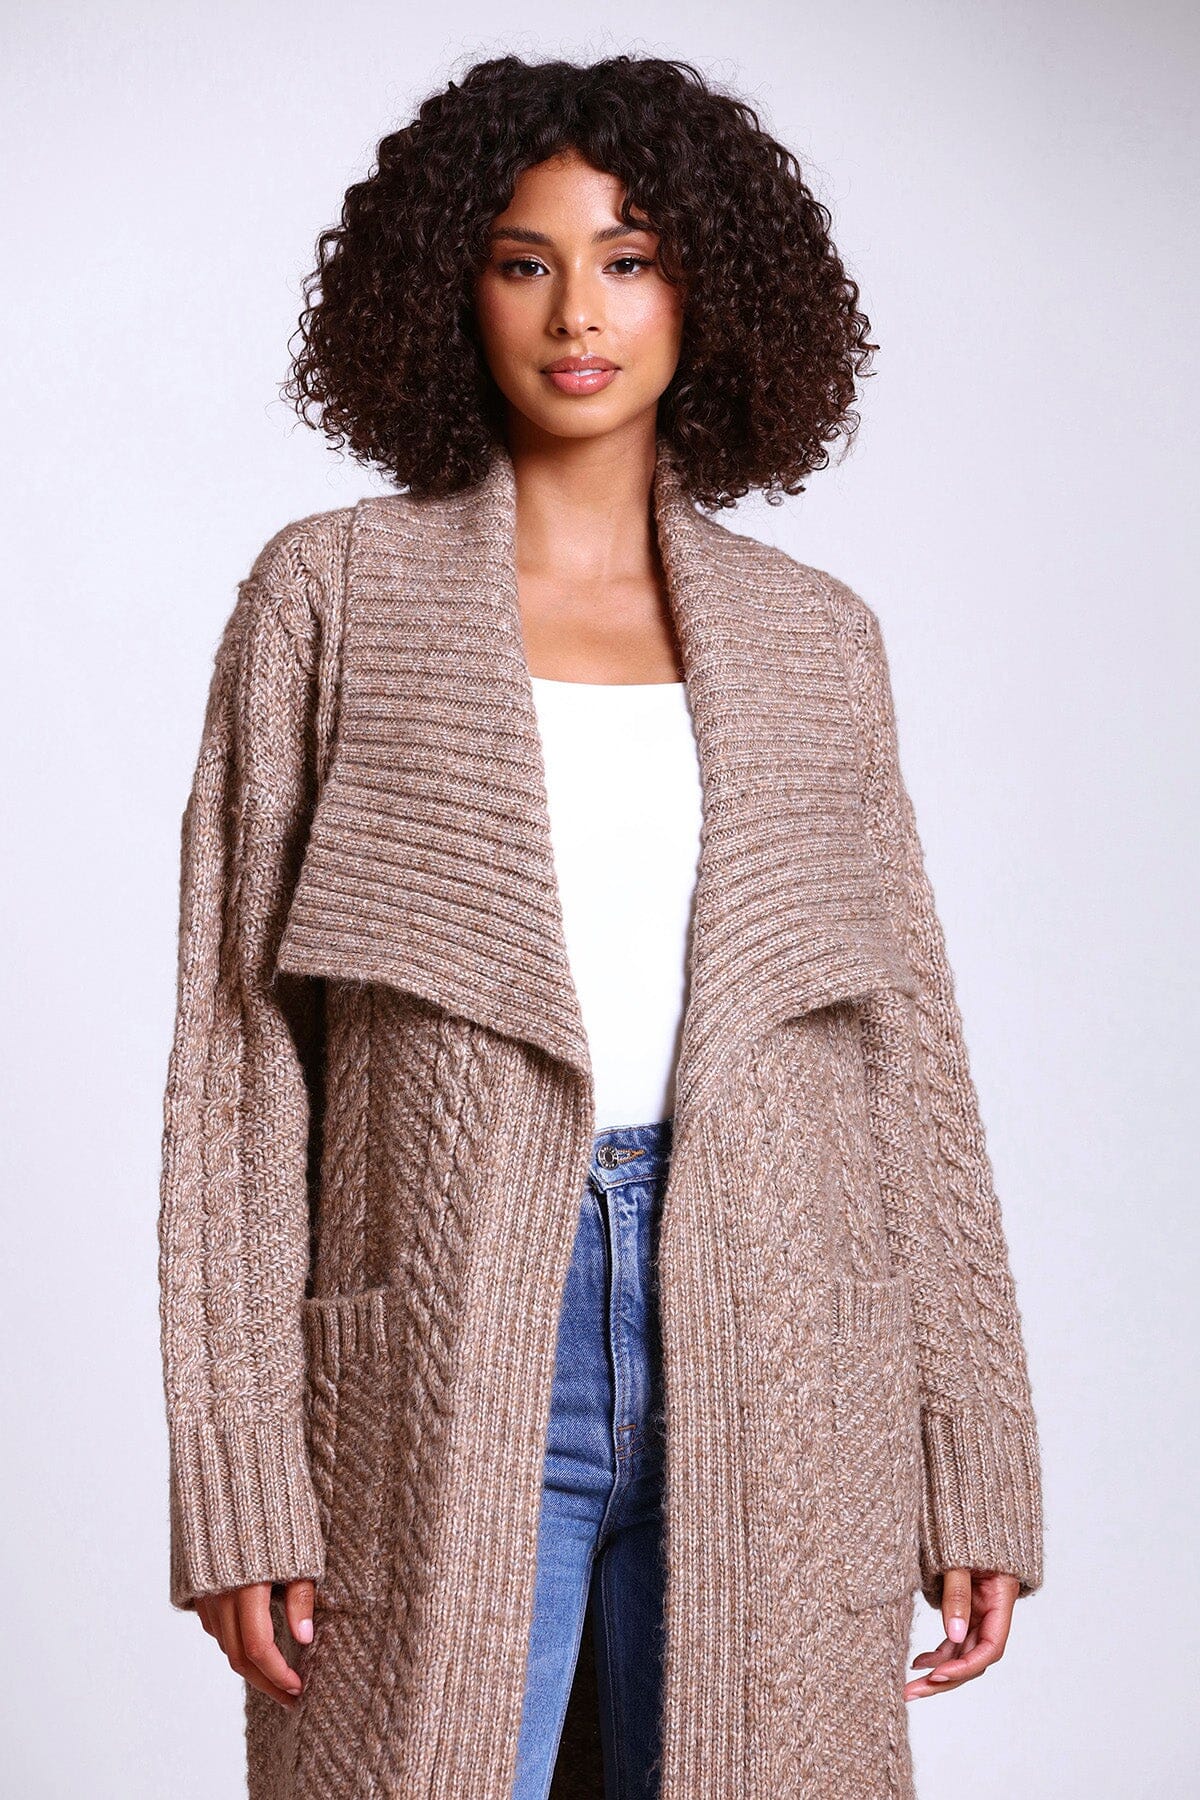 Mink brown envelope collar longline knit coatigan long cardigan - women's figure flattering cute cardigans coatigans for fall 2023